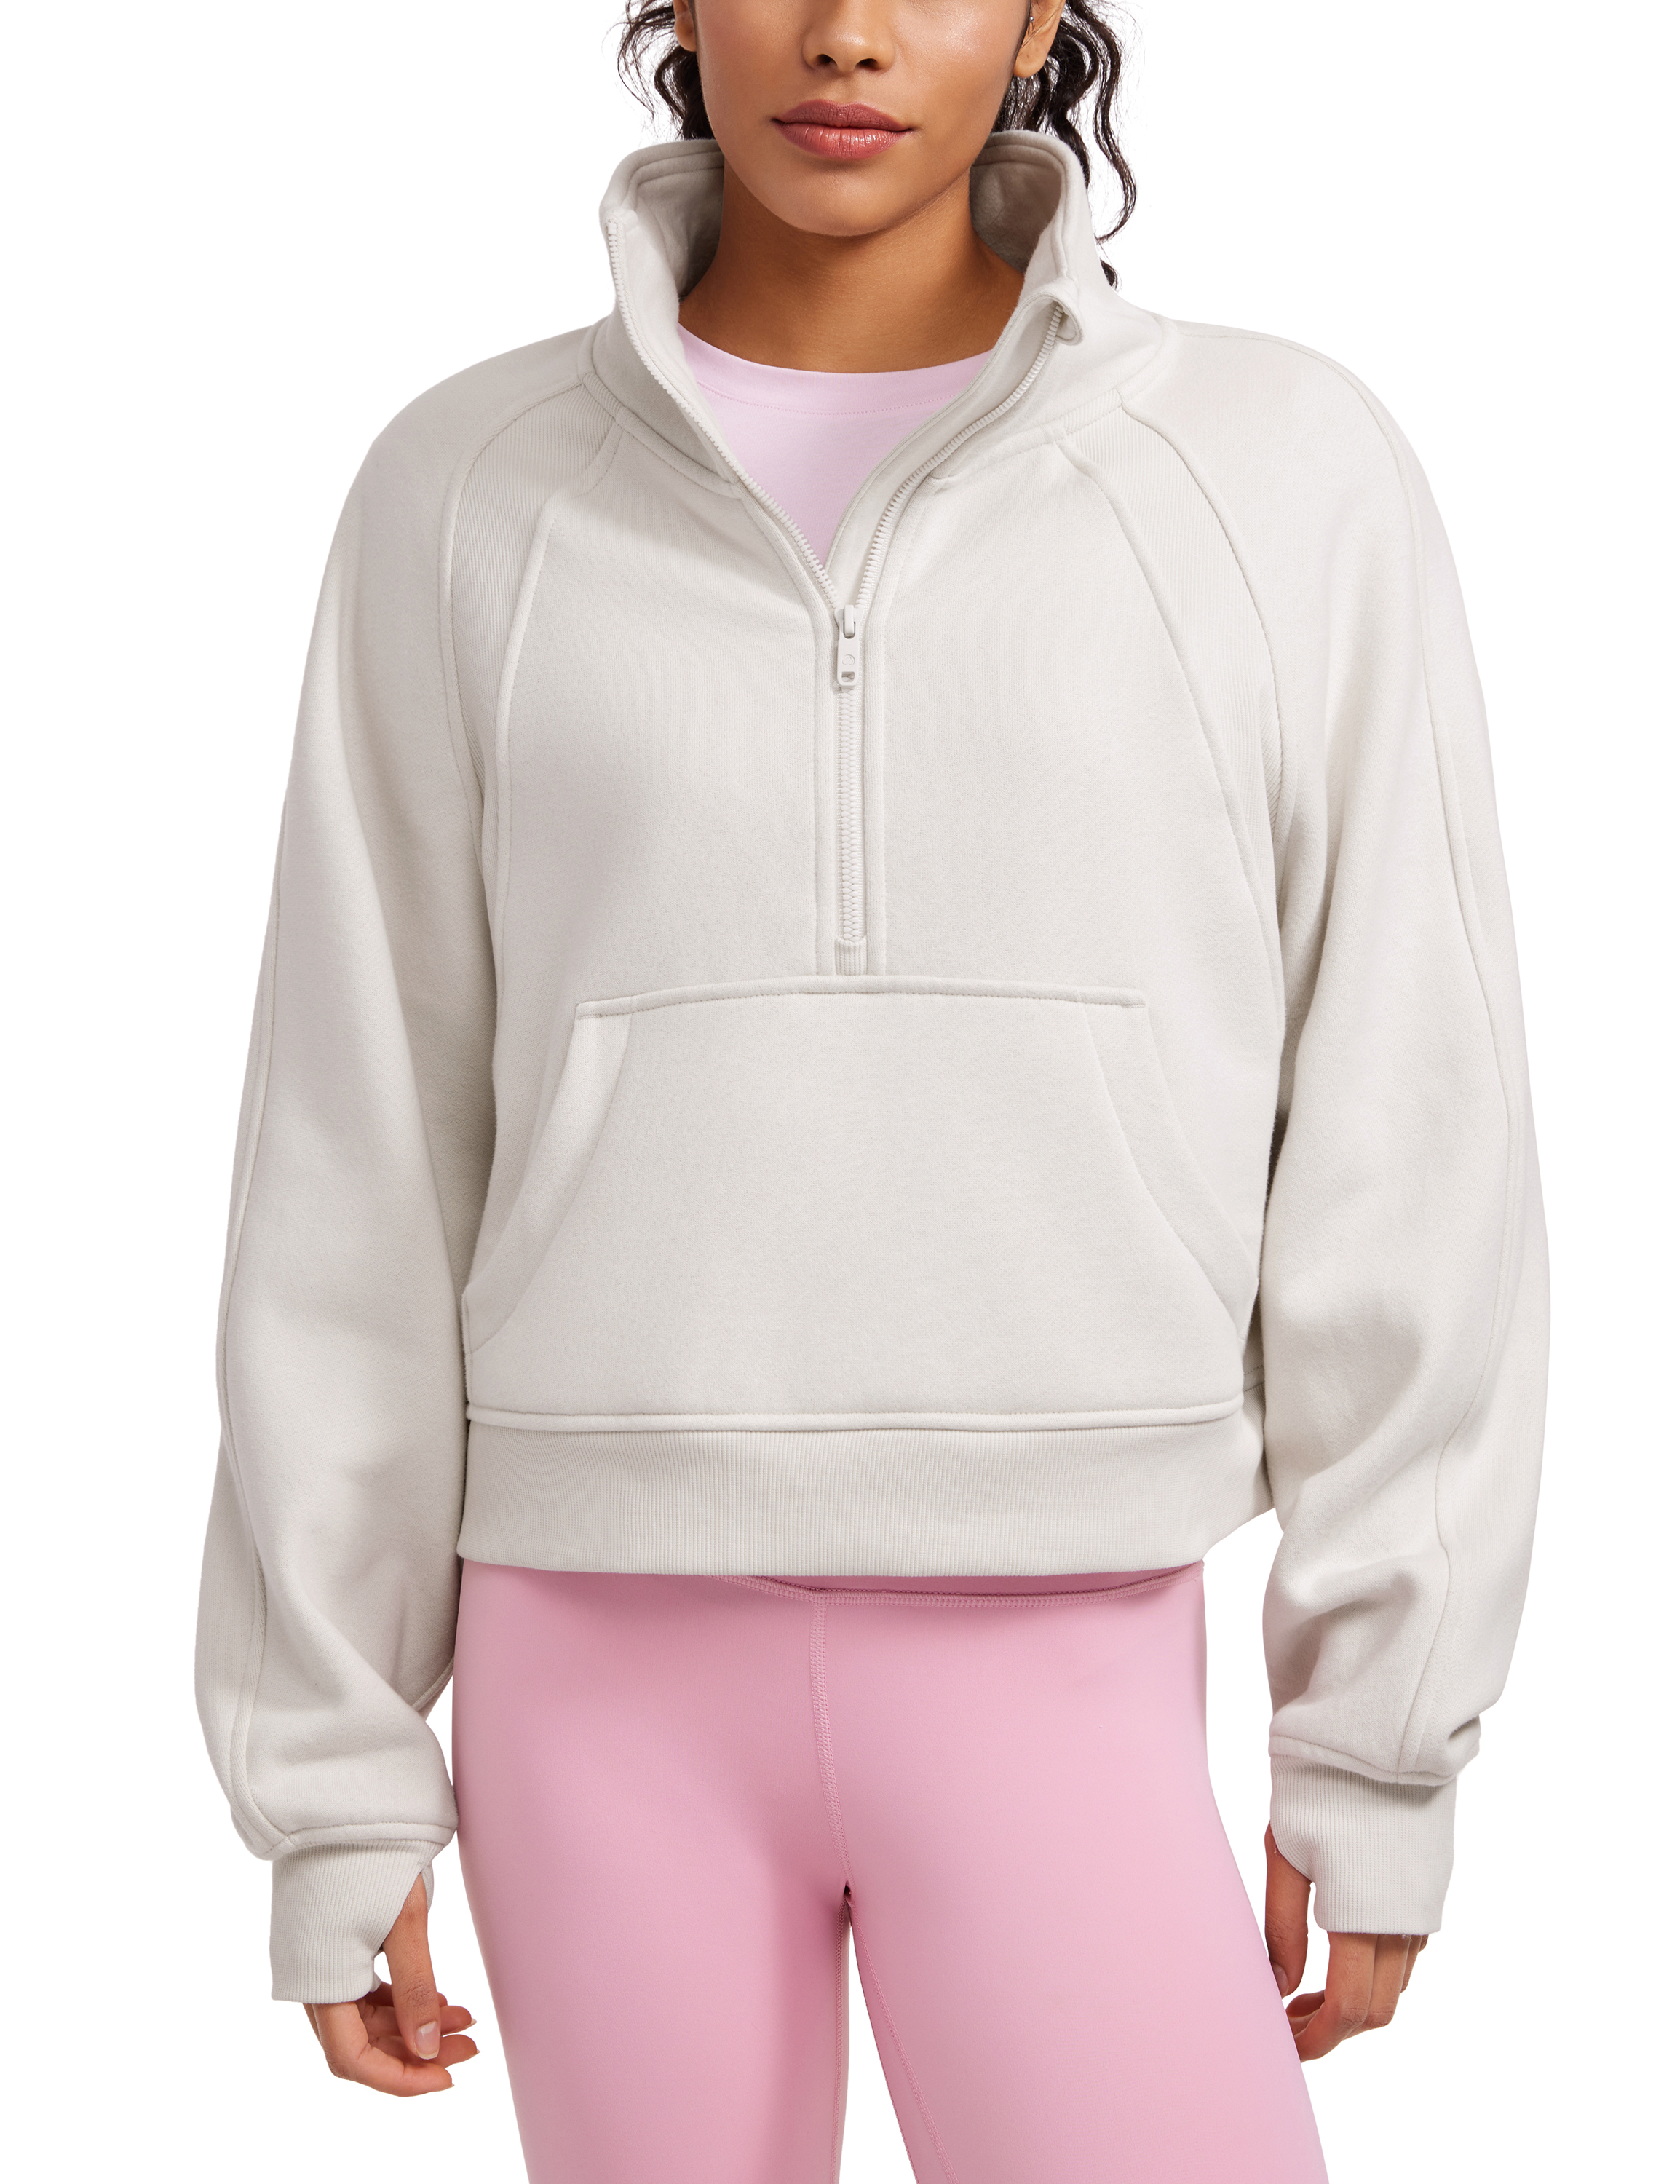 CRZ YOGA, Tops, Crz Yoga Blissful Pink Relaxed Short Sleeve Athletic  Shirt